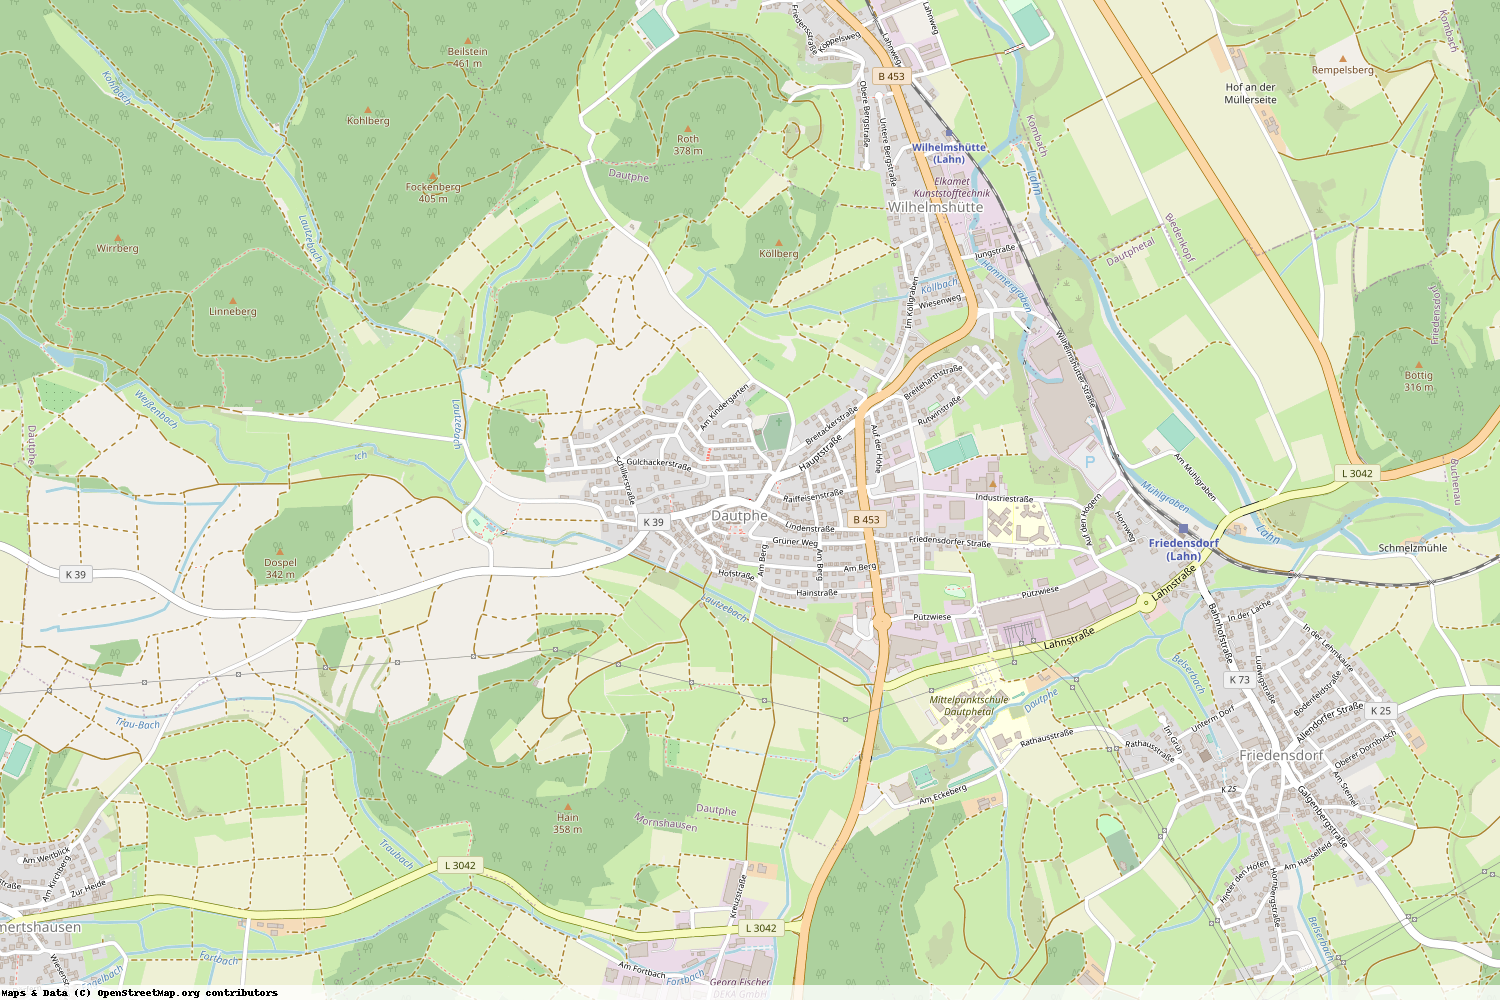 Ist gerade Stromausfall in Hessen - Marburg-Biedenkopf - Dautphetal?